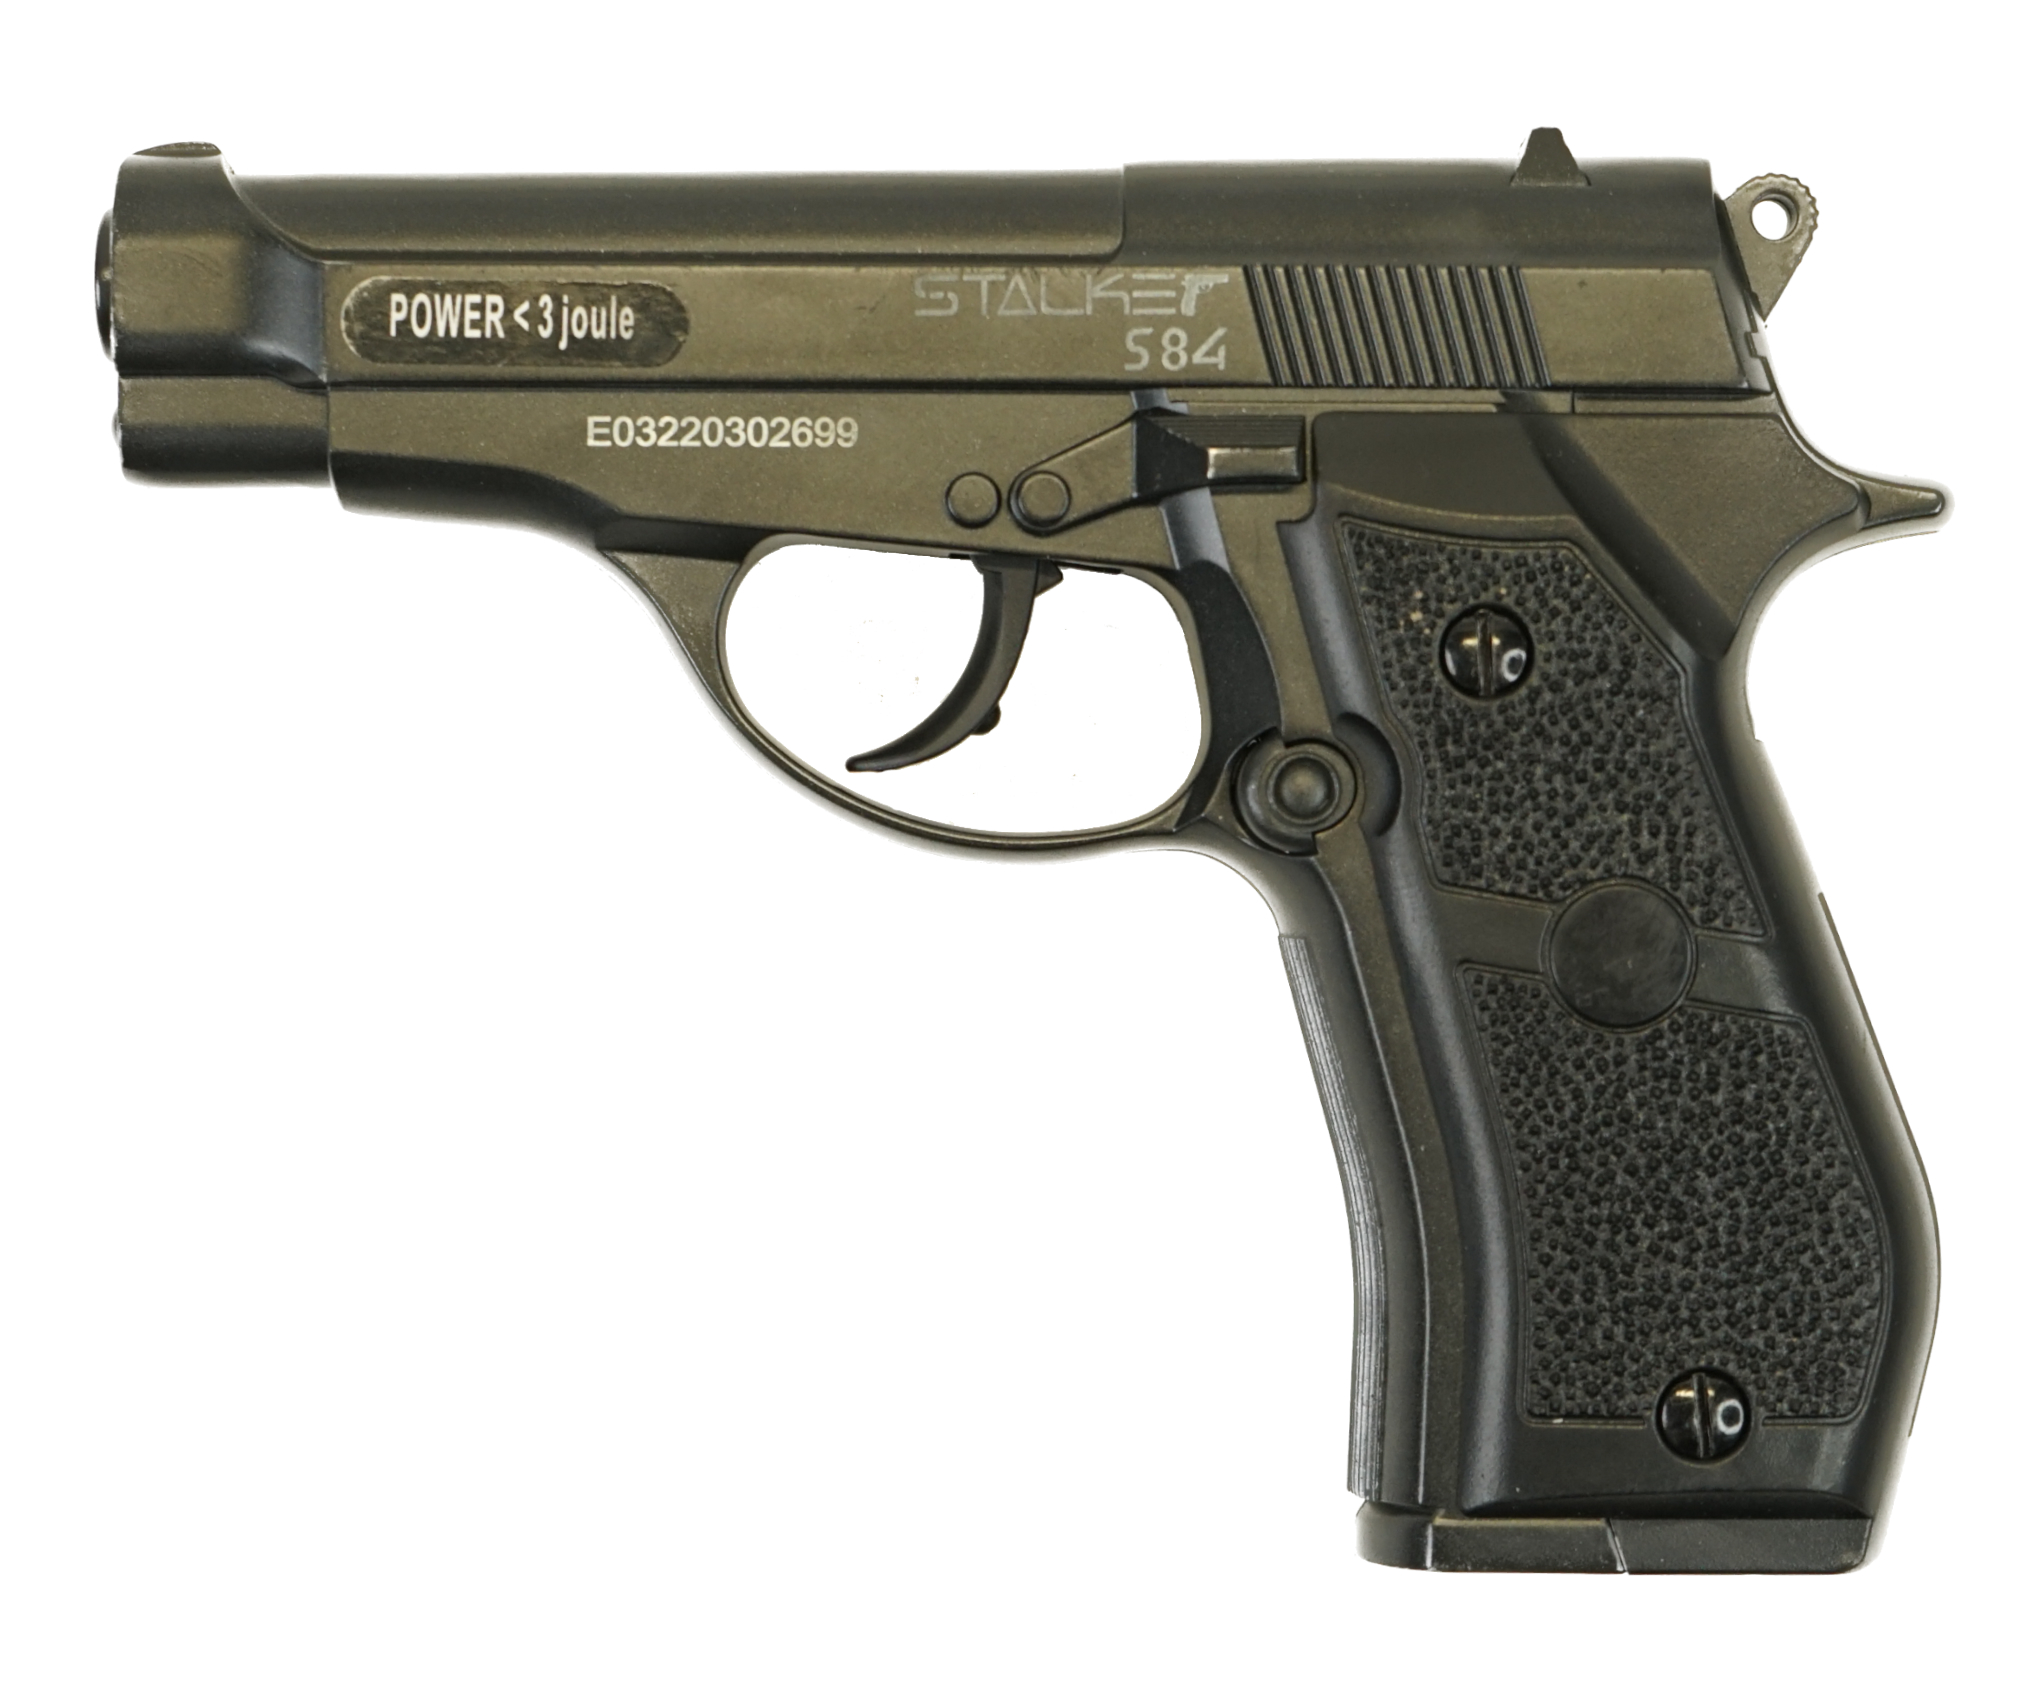 |Уценка| Пневматический пистолет Stalker S84 (Beretta) (№ ST-11051M-388-УЦ)